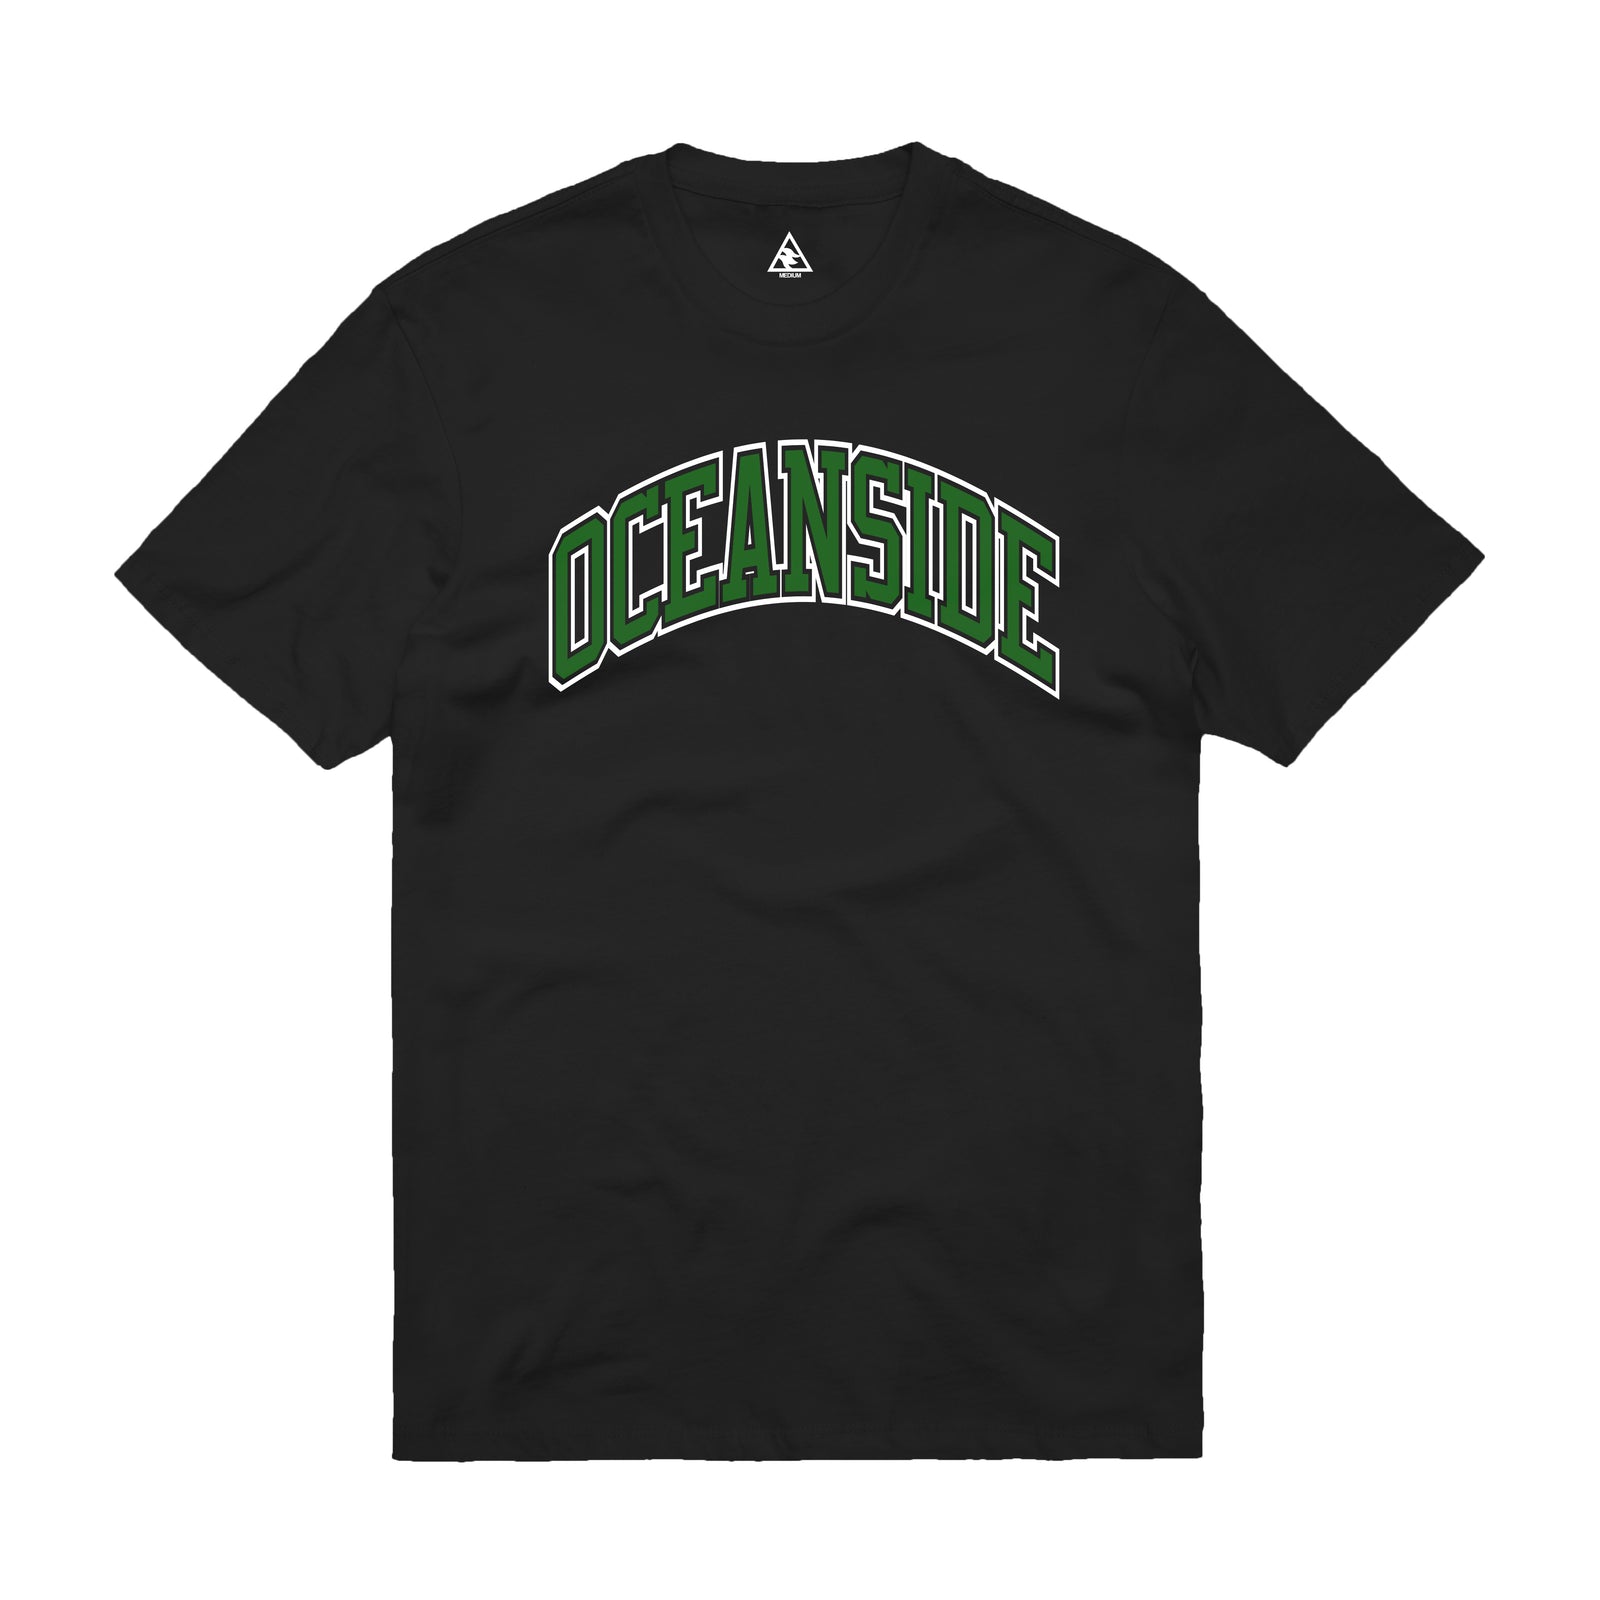 Pirates Oceanside T-Shirt (Black)